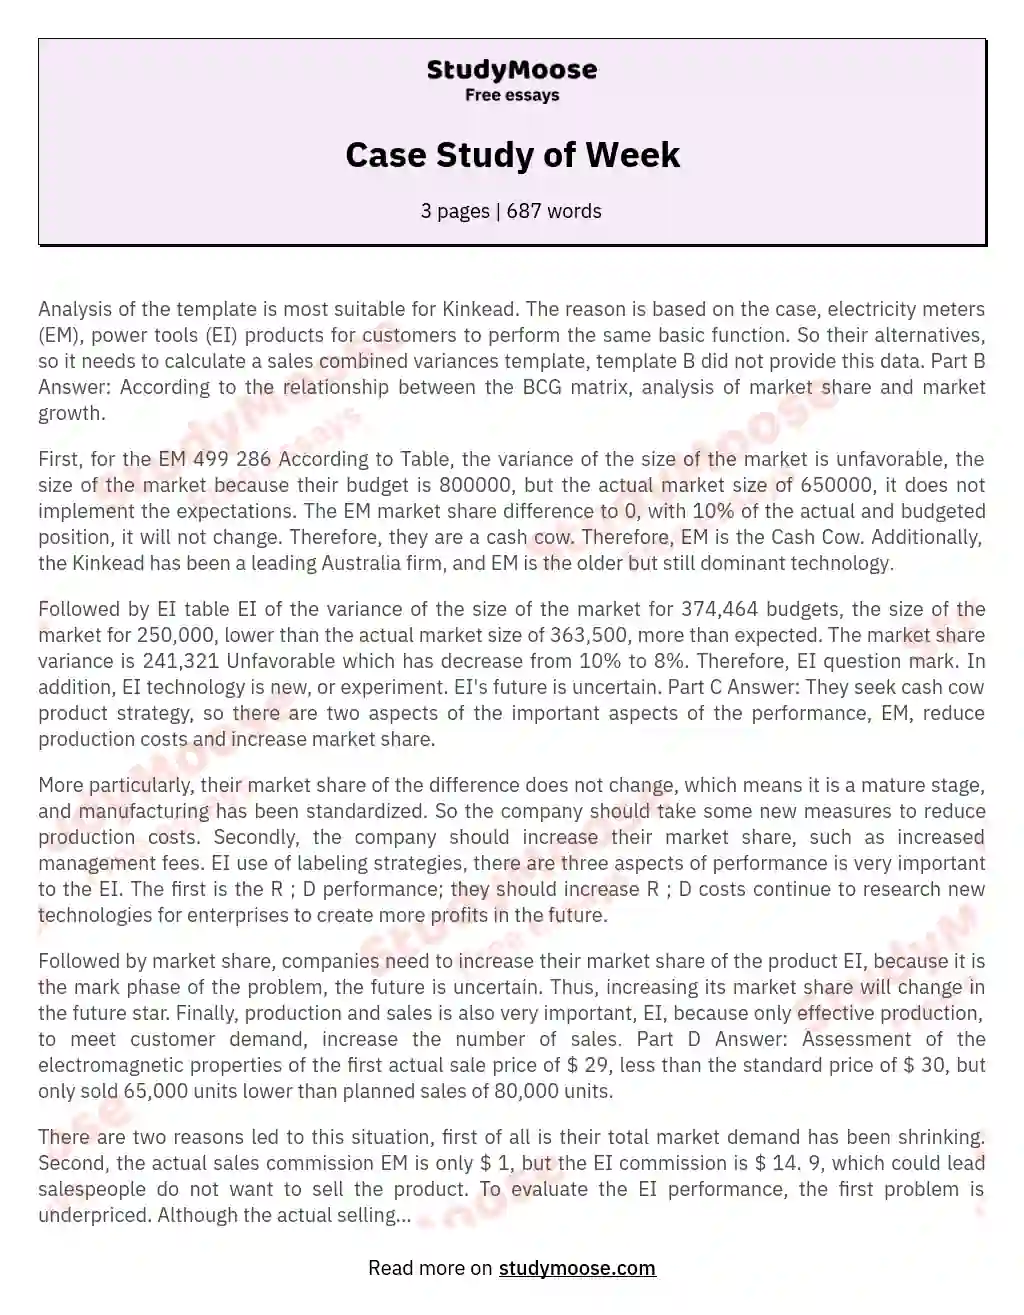 Case Study of Week essay